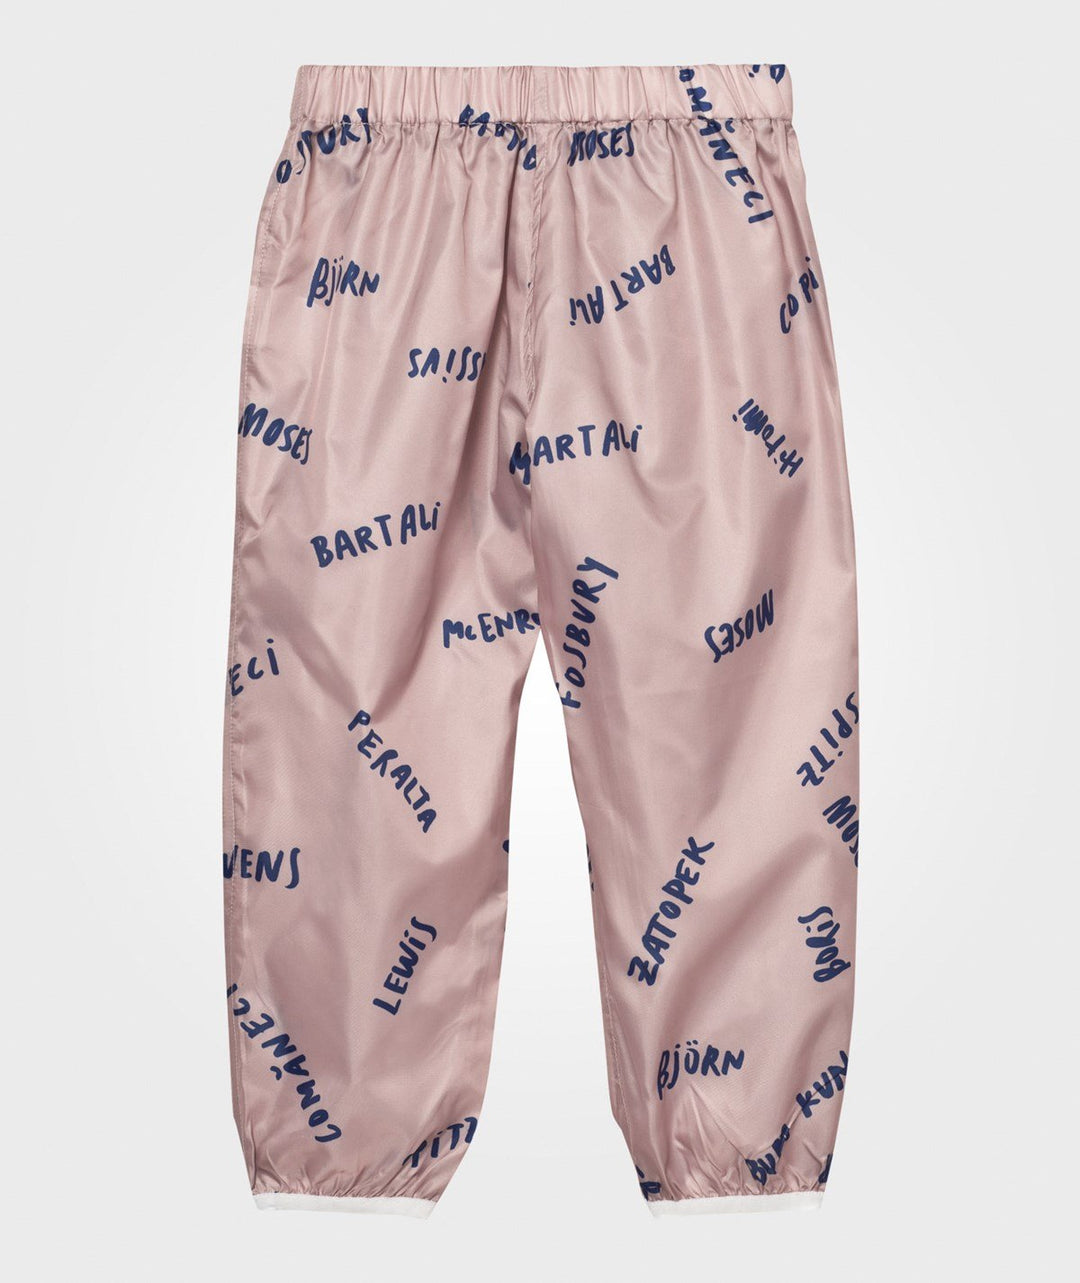 Bobo Choses off-rose A Legend print waterproof windbreaker pants Second Season diff. sizes